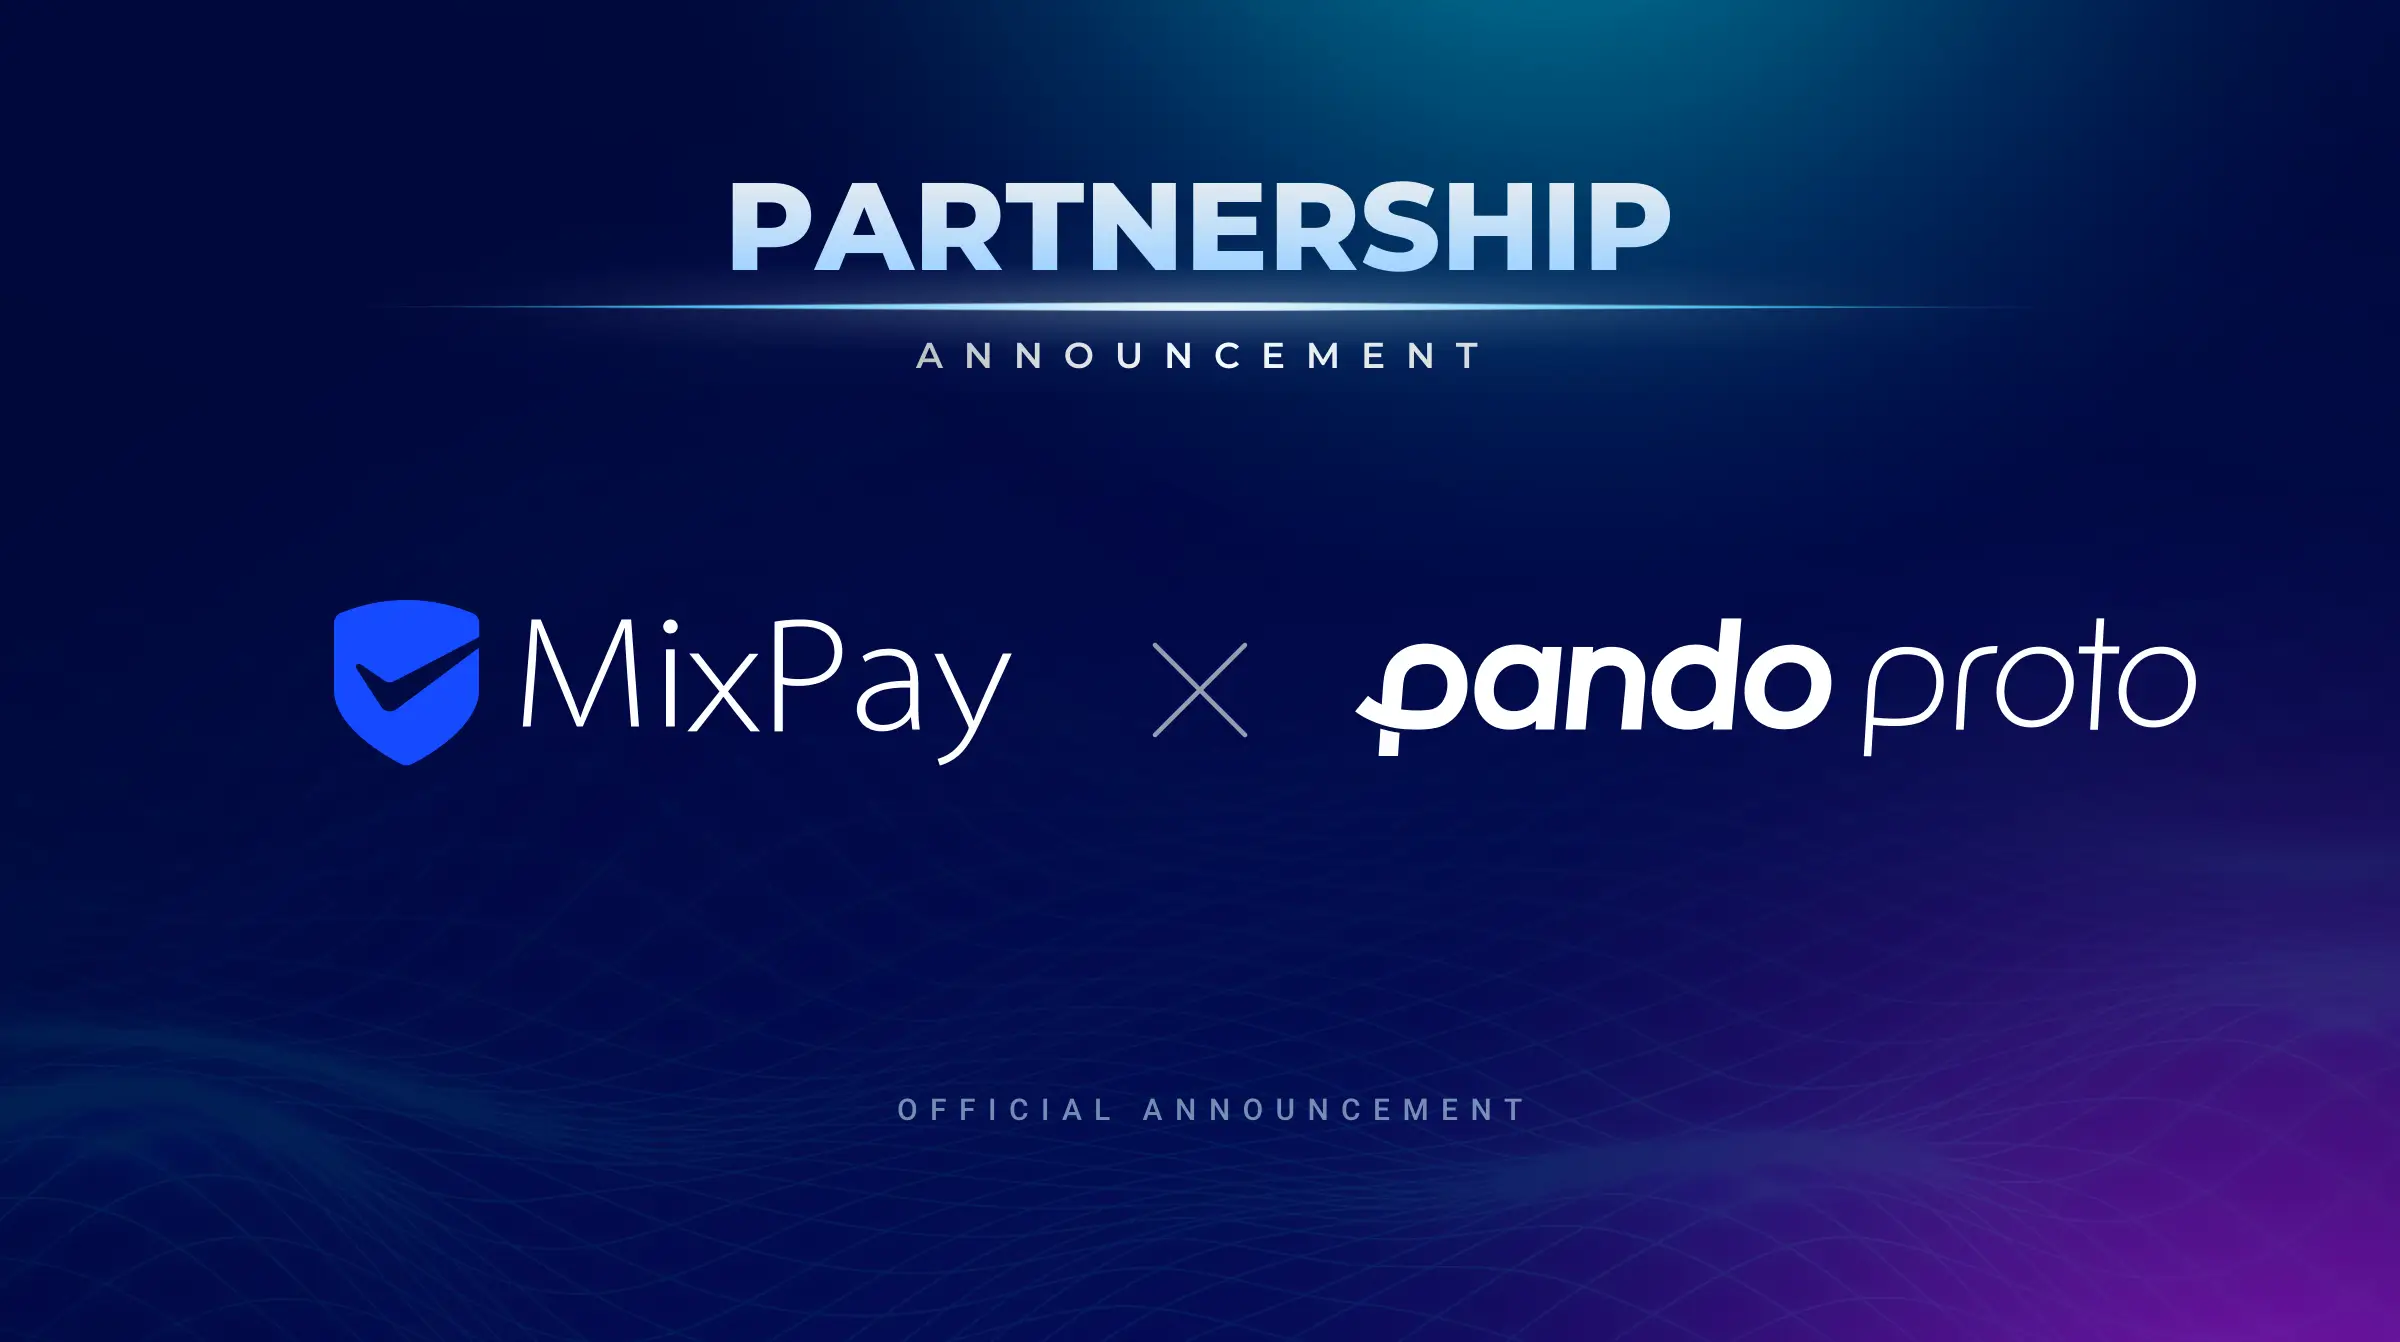 partnership strategica tra MixPay e Pando Proto